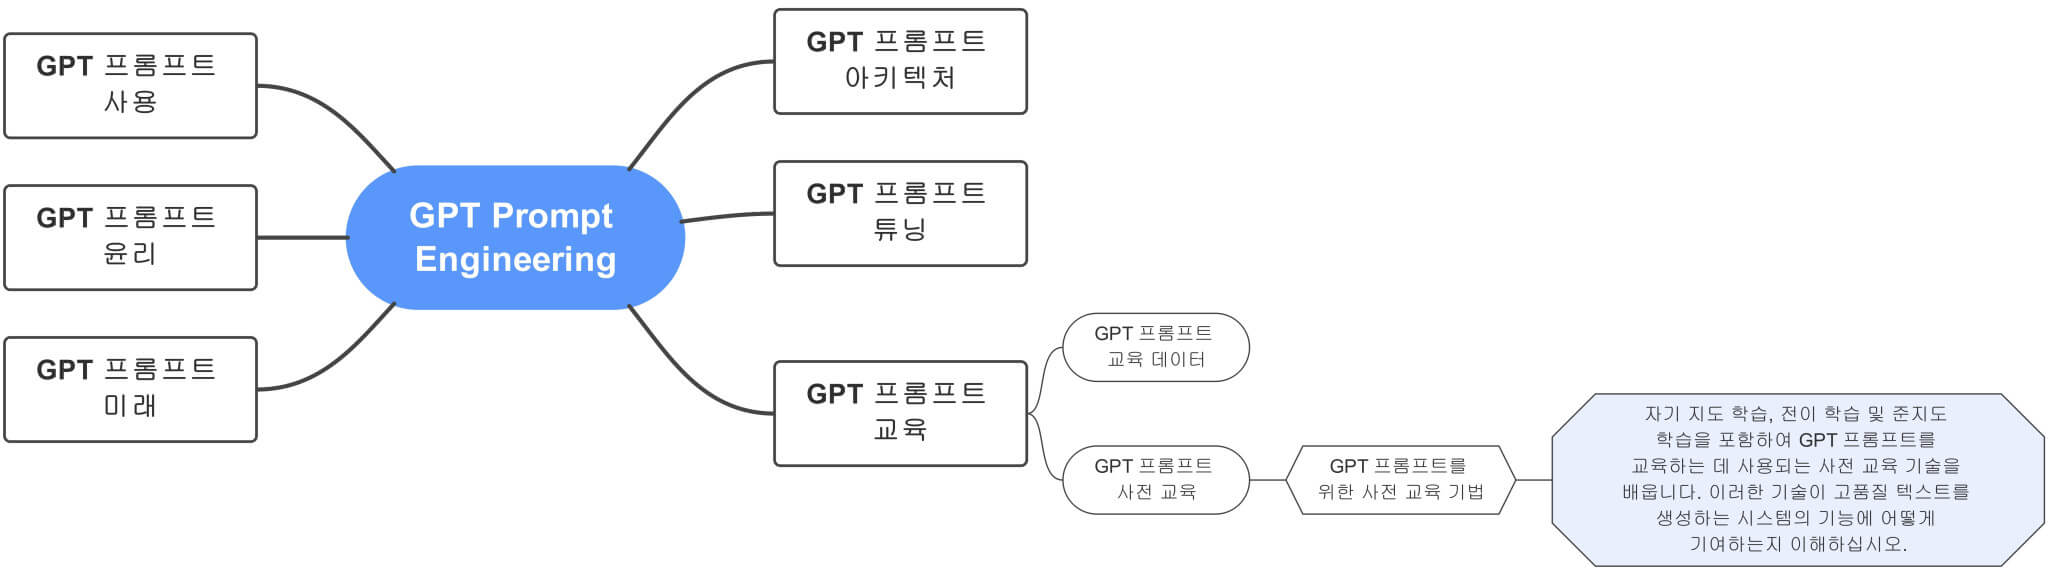 GPT_Prompt_Engineering에서_GPT_프롬프트를_위한_사전_교육_기법까지_확장한_전체_마인드맵_연결도